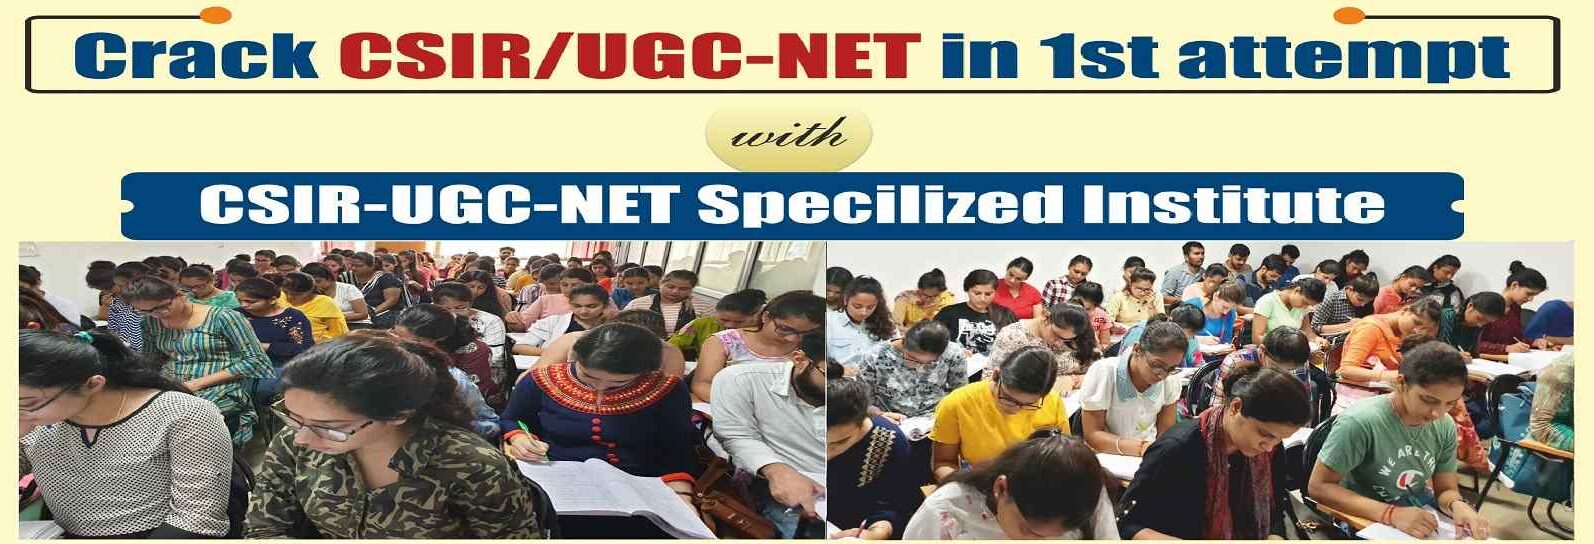 UGC NET COACHING IN CHANDIGARH